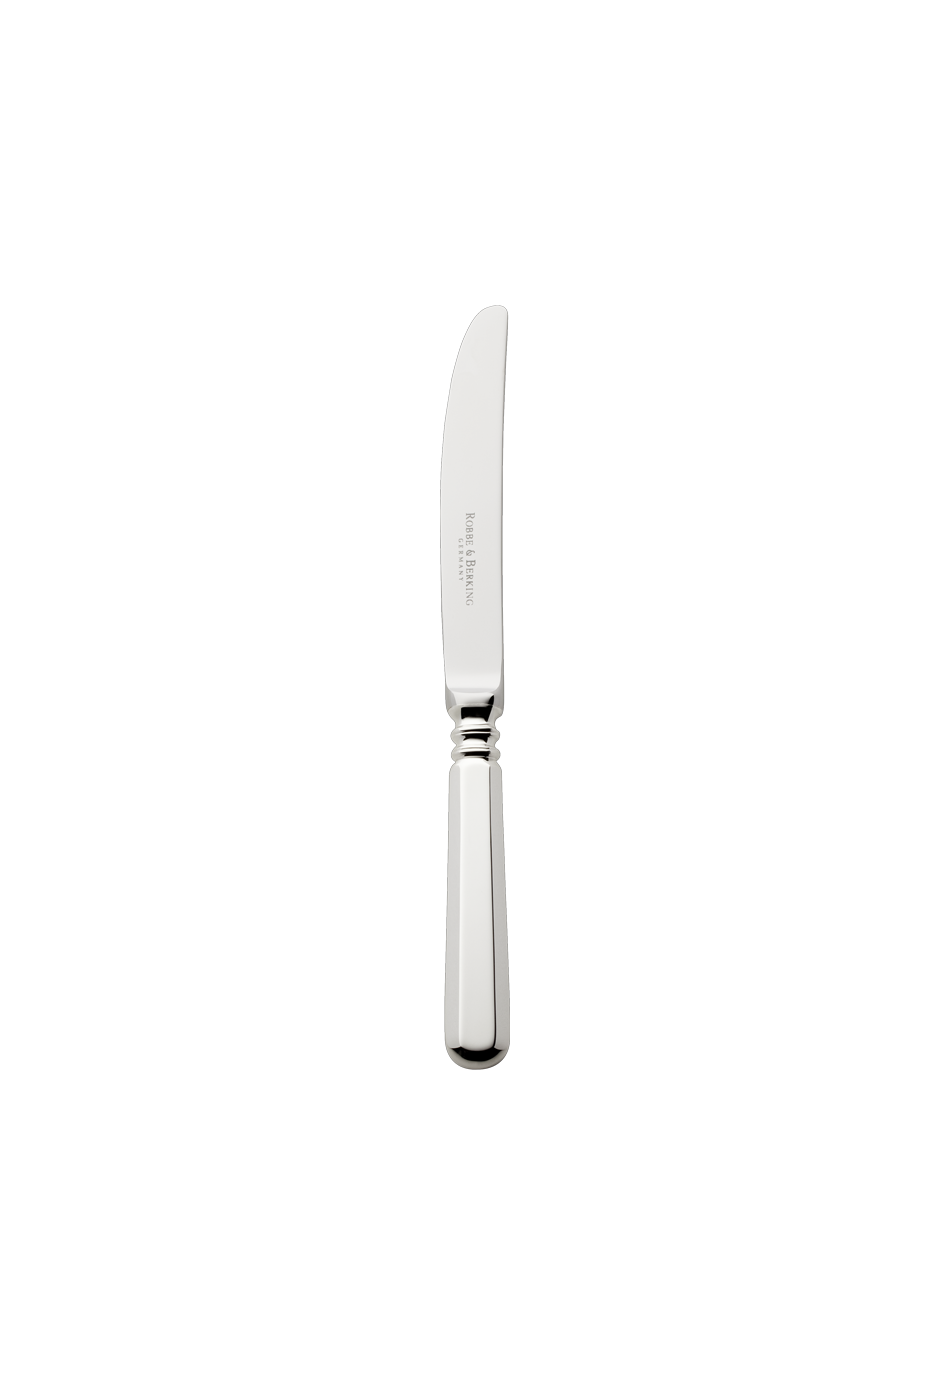 Alt-Spaten Cake Knife / Fruit Knife (925 Sterling Silver)